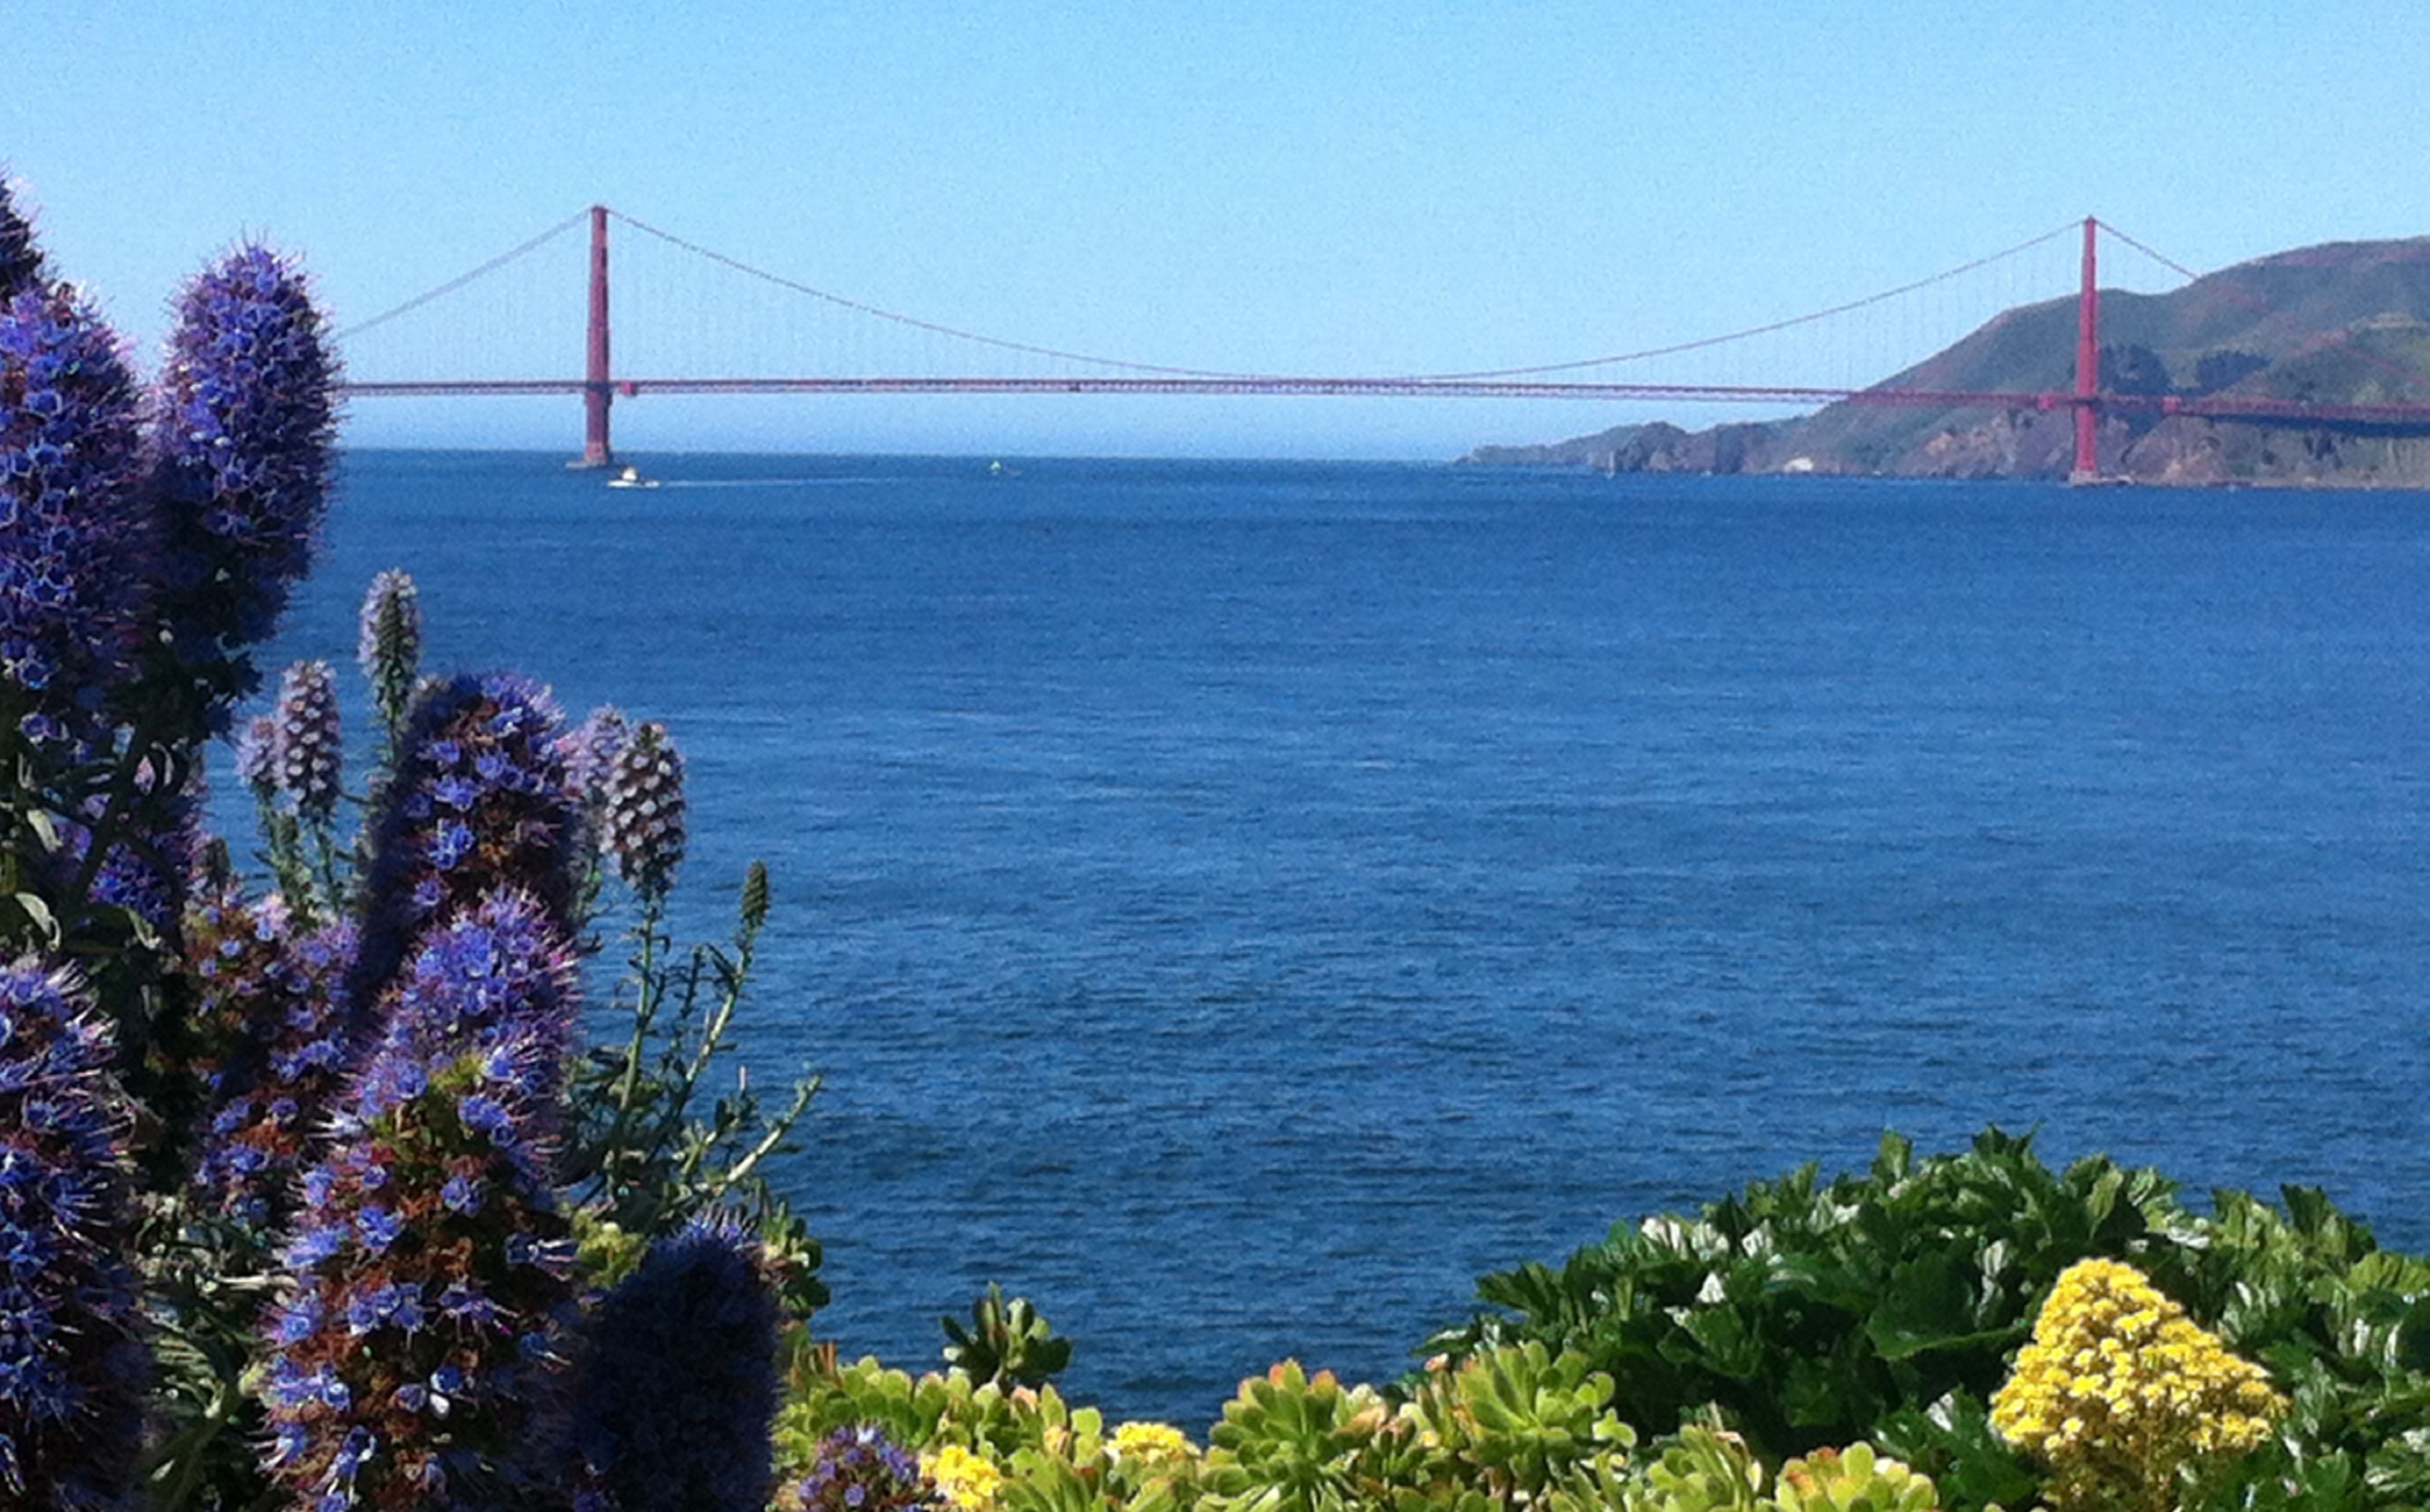 The Golden Gate Bridge taken from the gardens on Alcatraz Island.